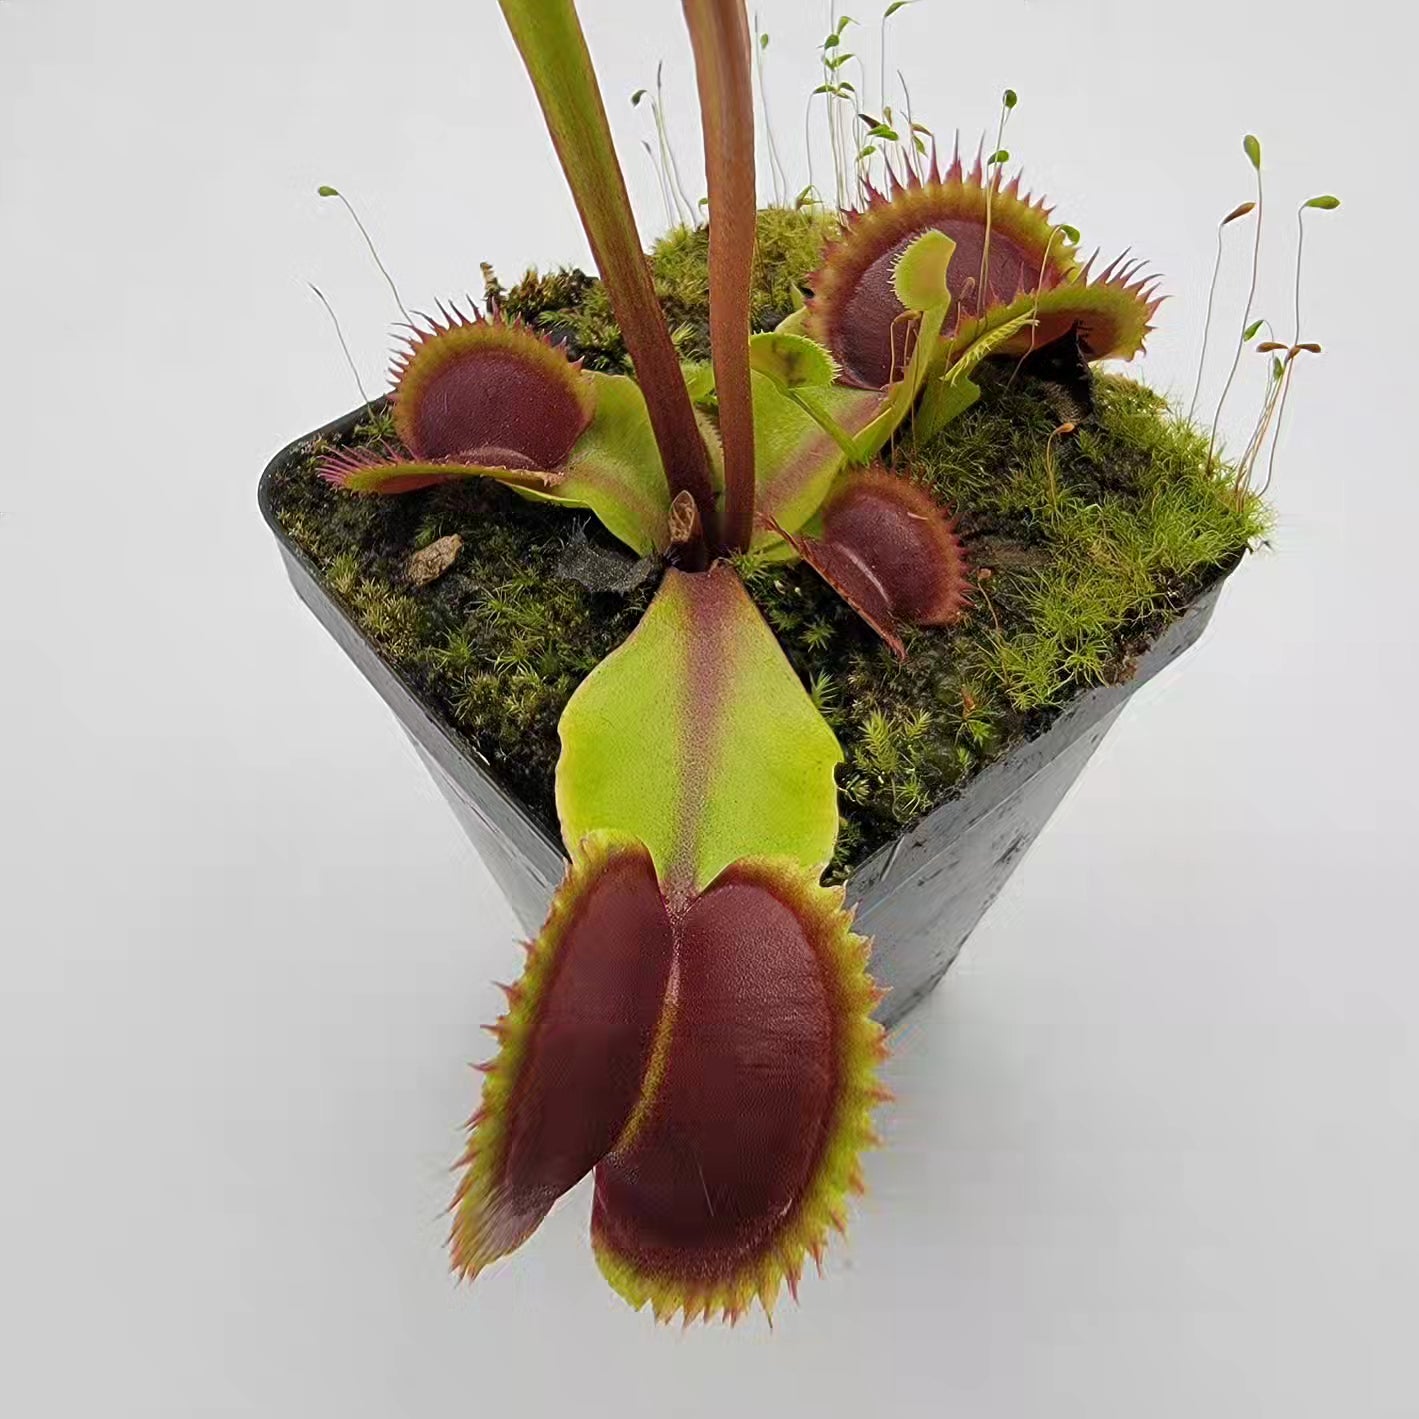 Venus flytrap (Dionaea muscipula) 'Sawtooth' x 'Red Piranha'